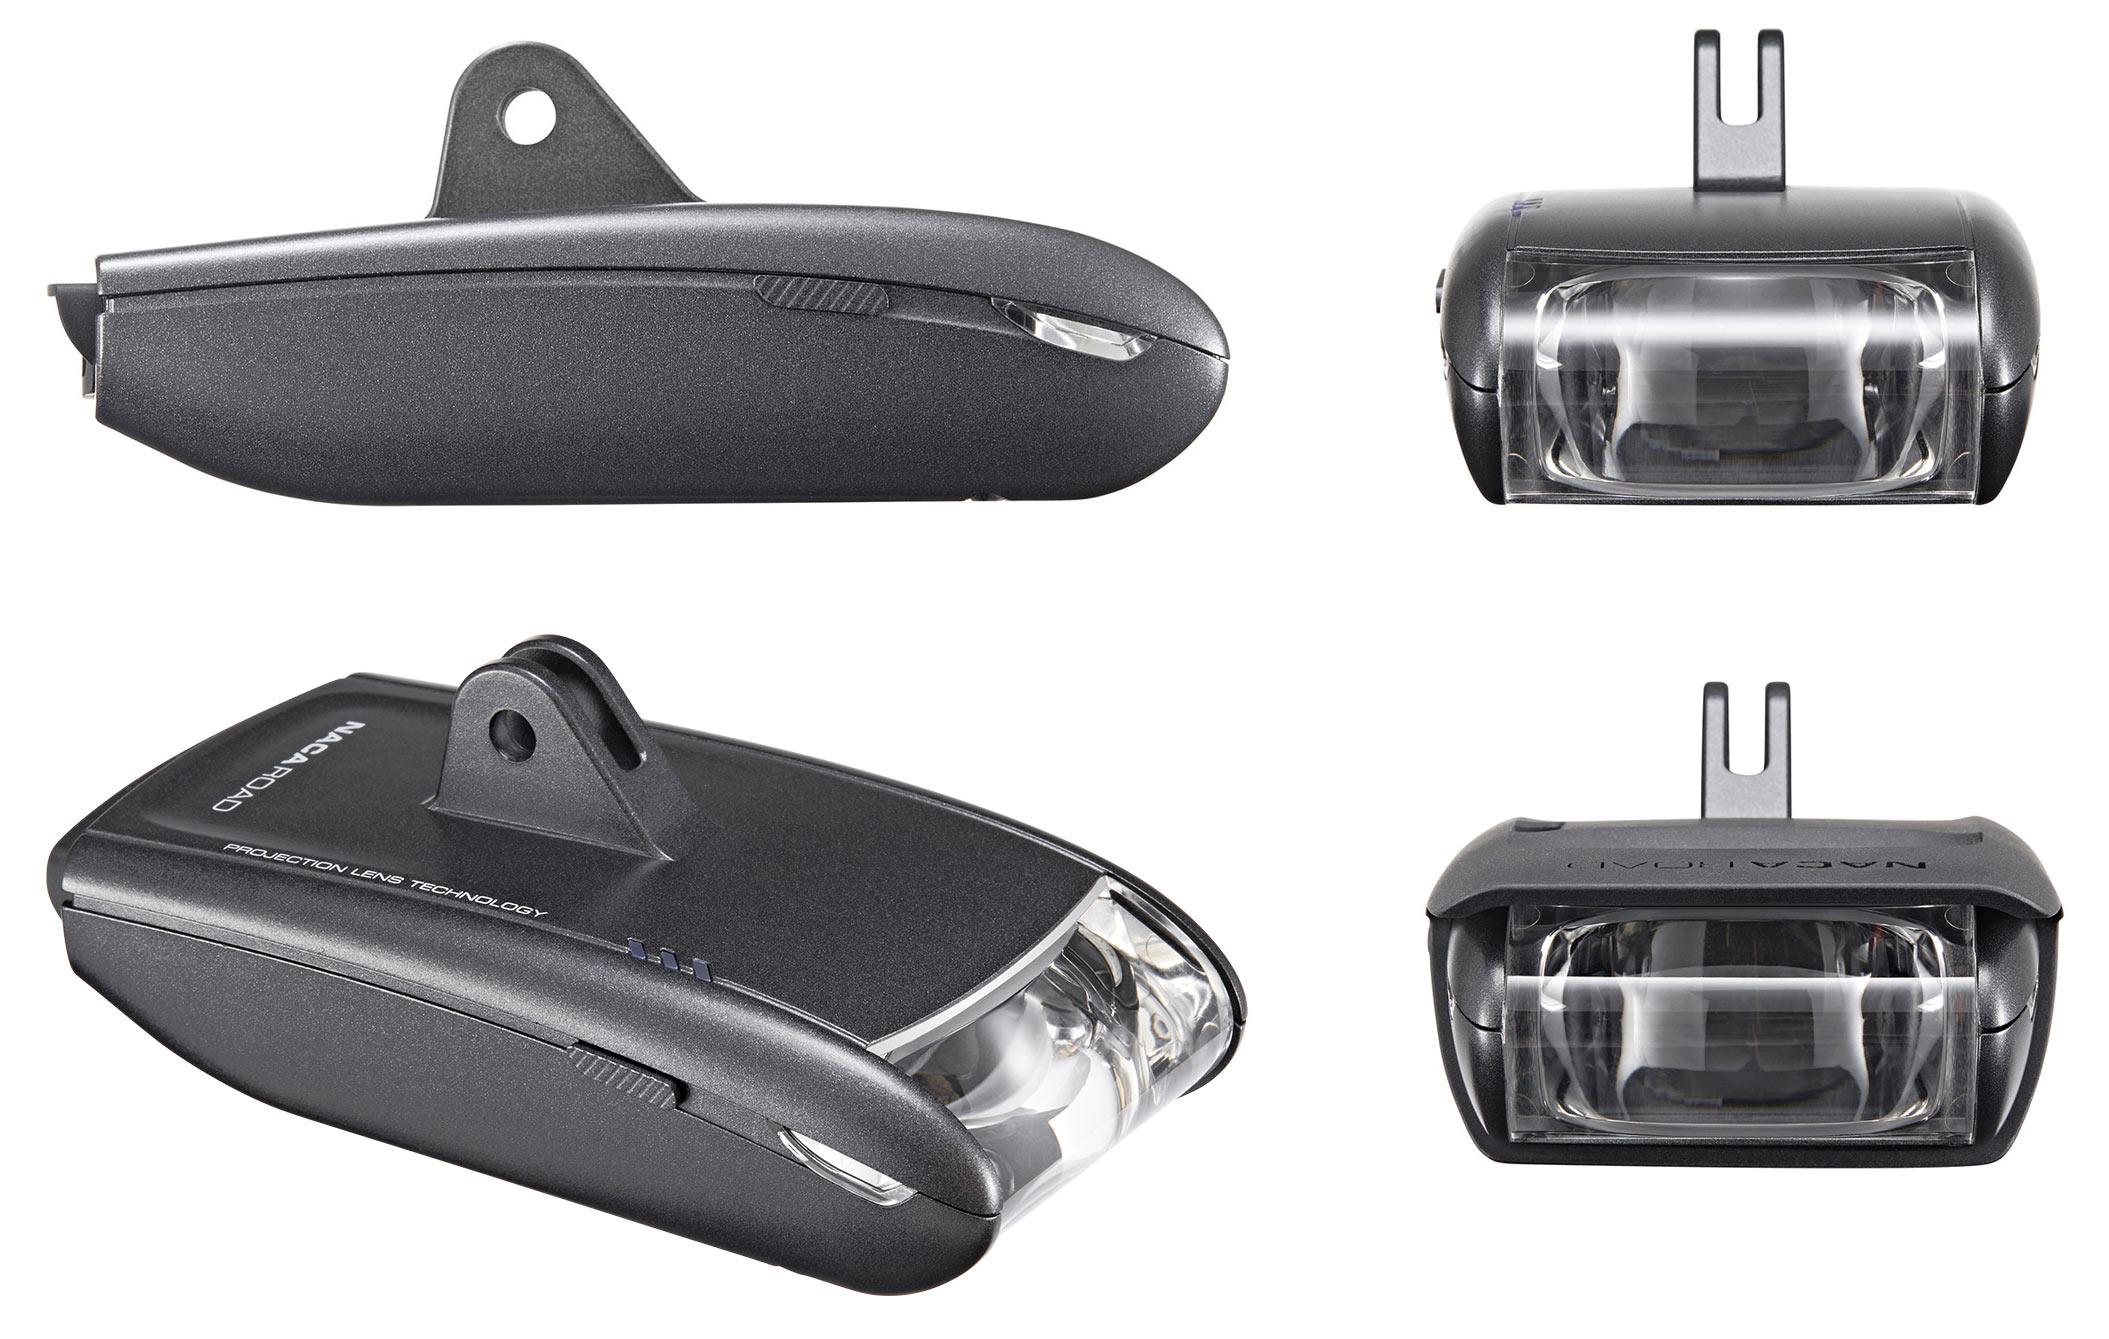 lightskin naca road aero profile bike headlight shown from all angles